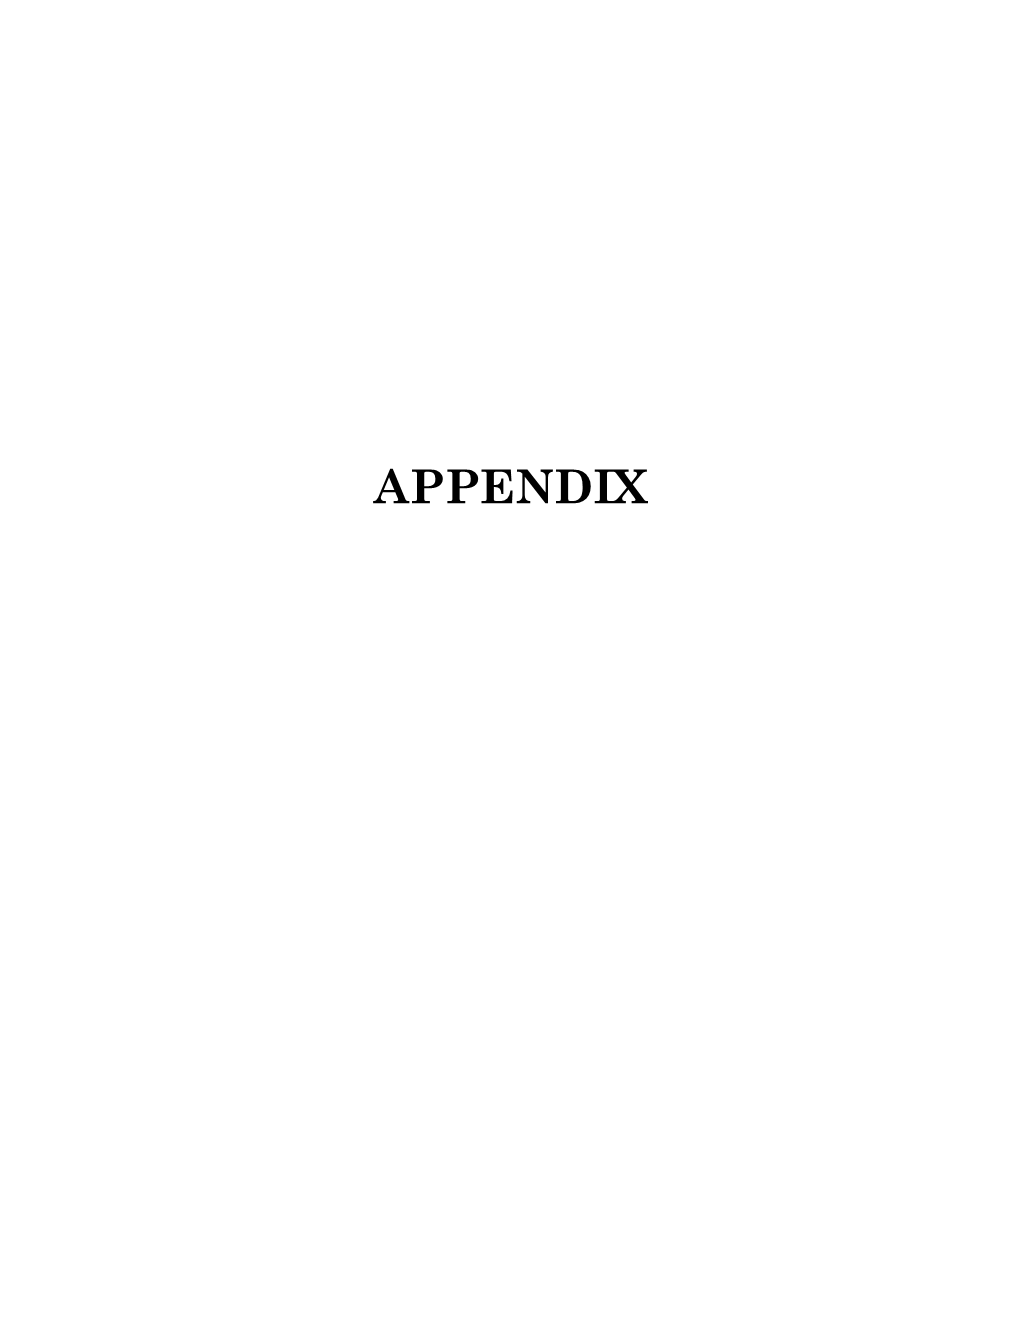 Appendix to Petition